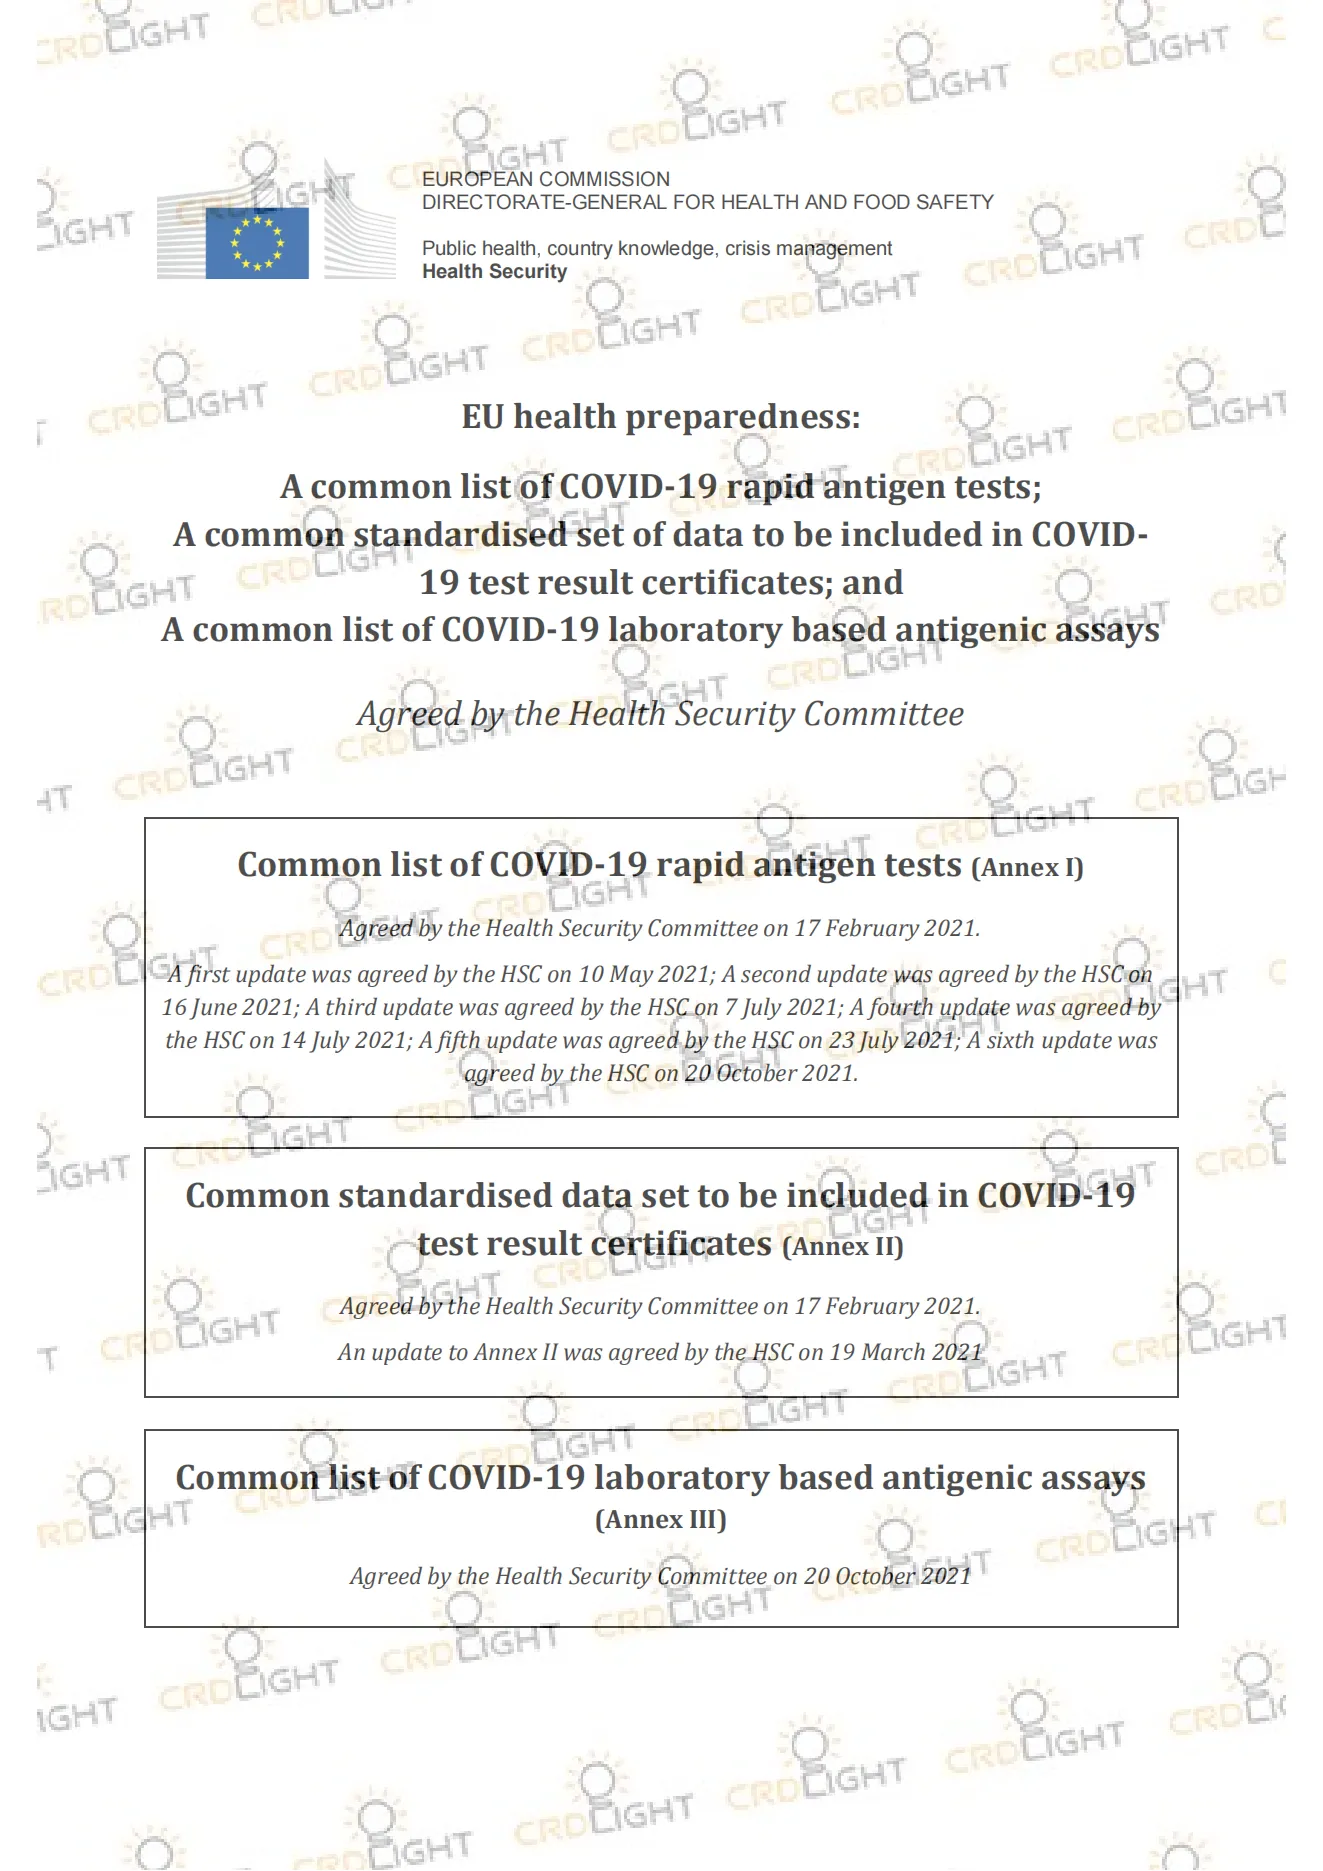 Certificates of Antigen Test Kit: CRDLIGHT Professional Test Kit EU list - Common list